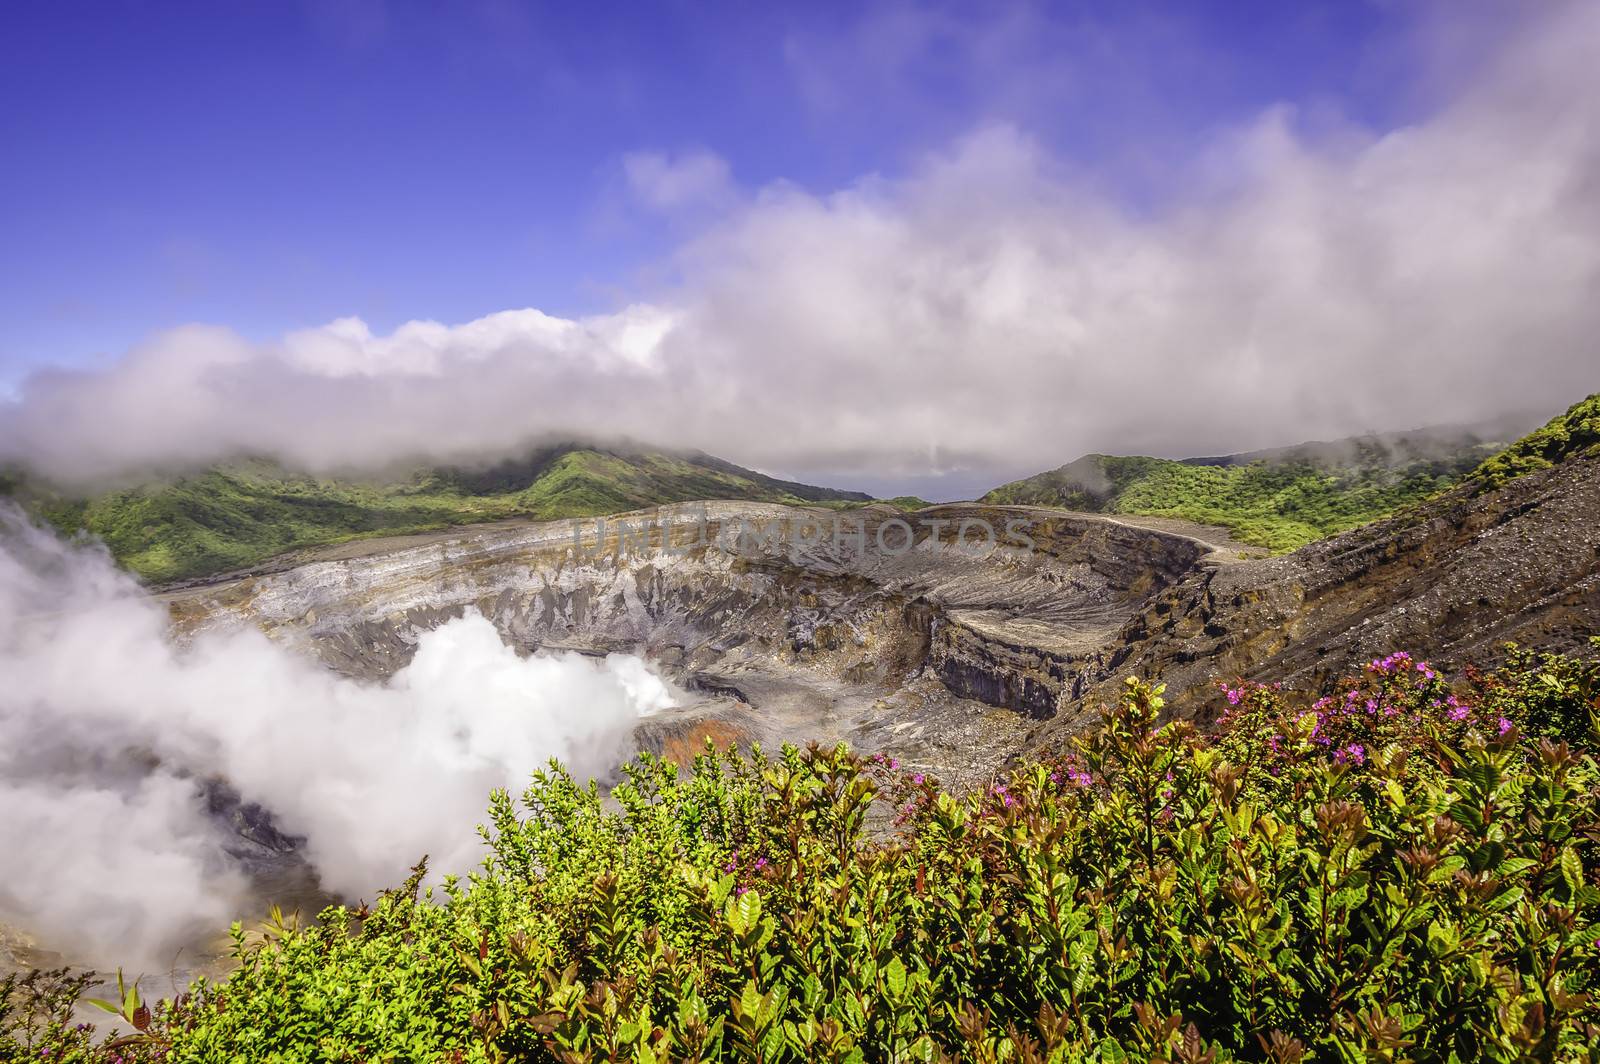 Main crater of the Poas Volcano in Costa Rica.